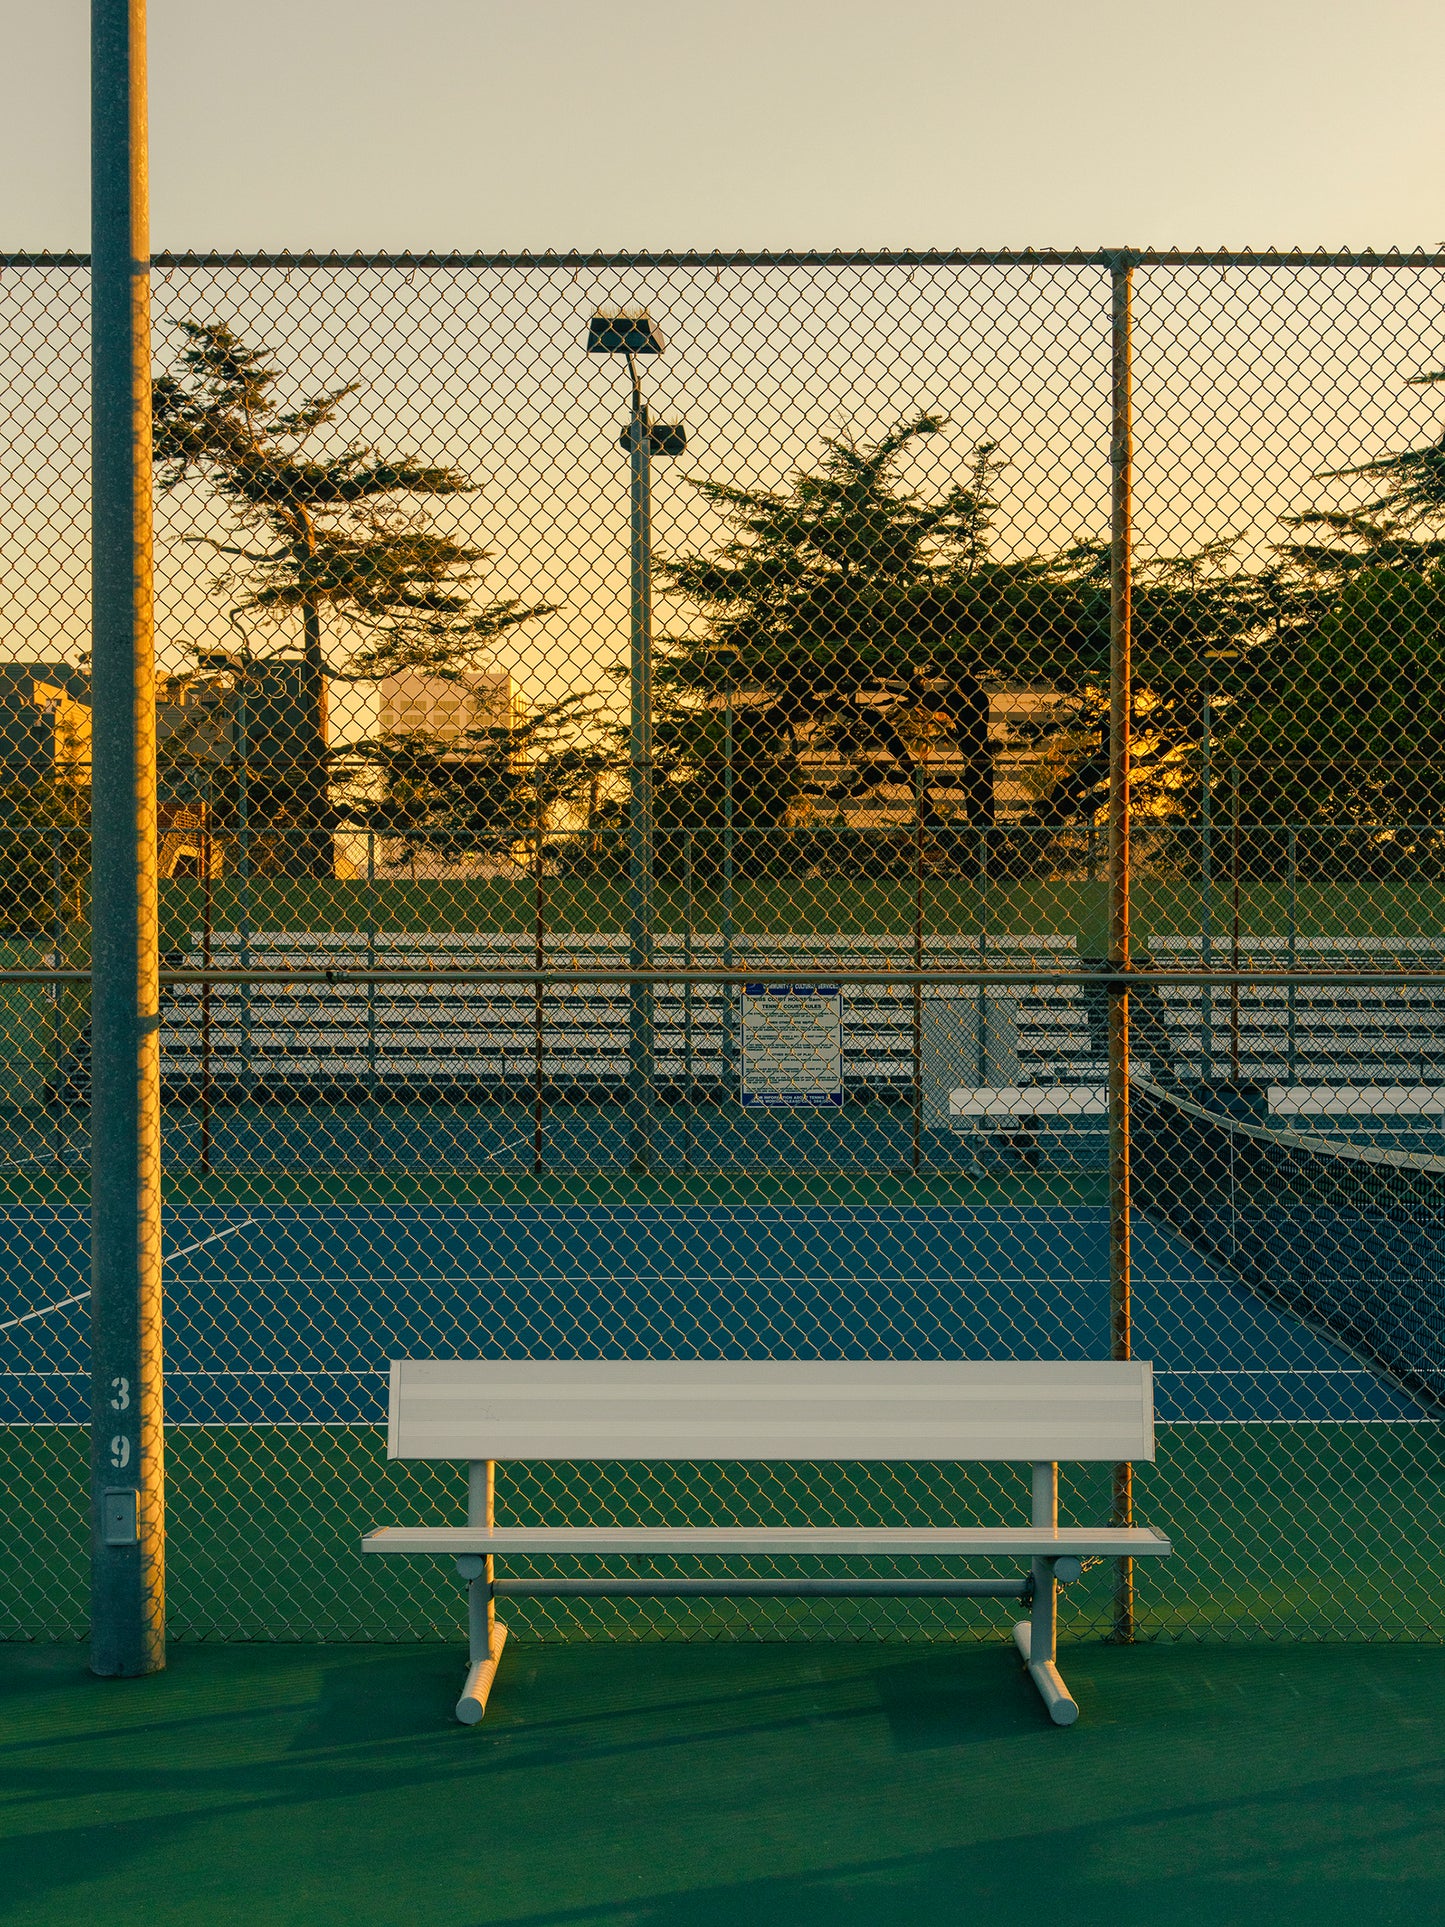 Romain Laprade - Sunset Tennis, Los Angeles, 2022